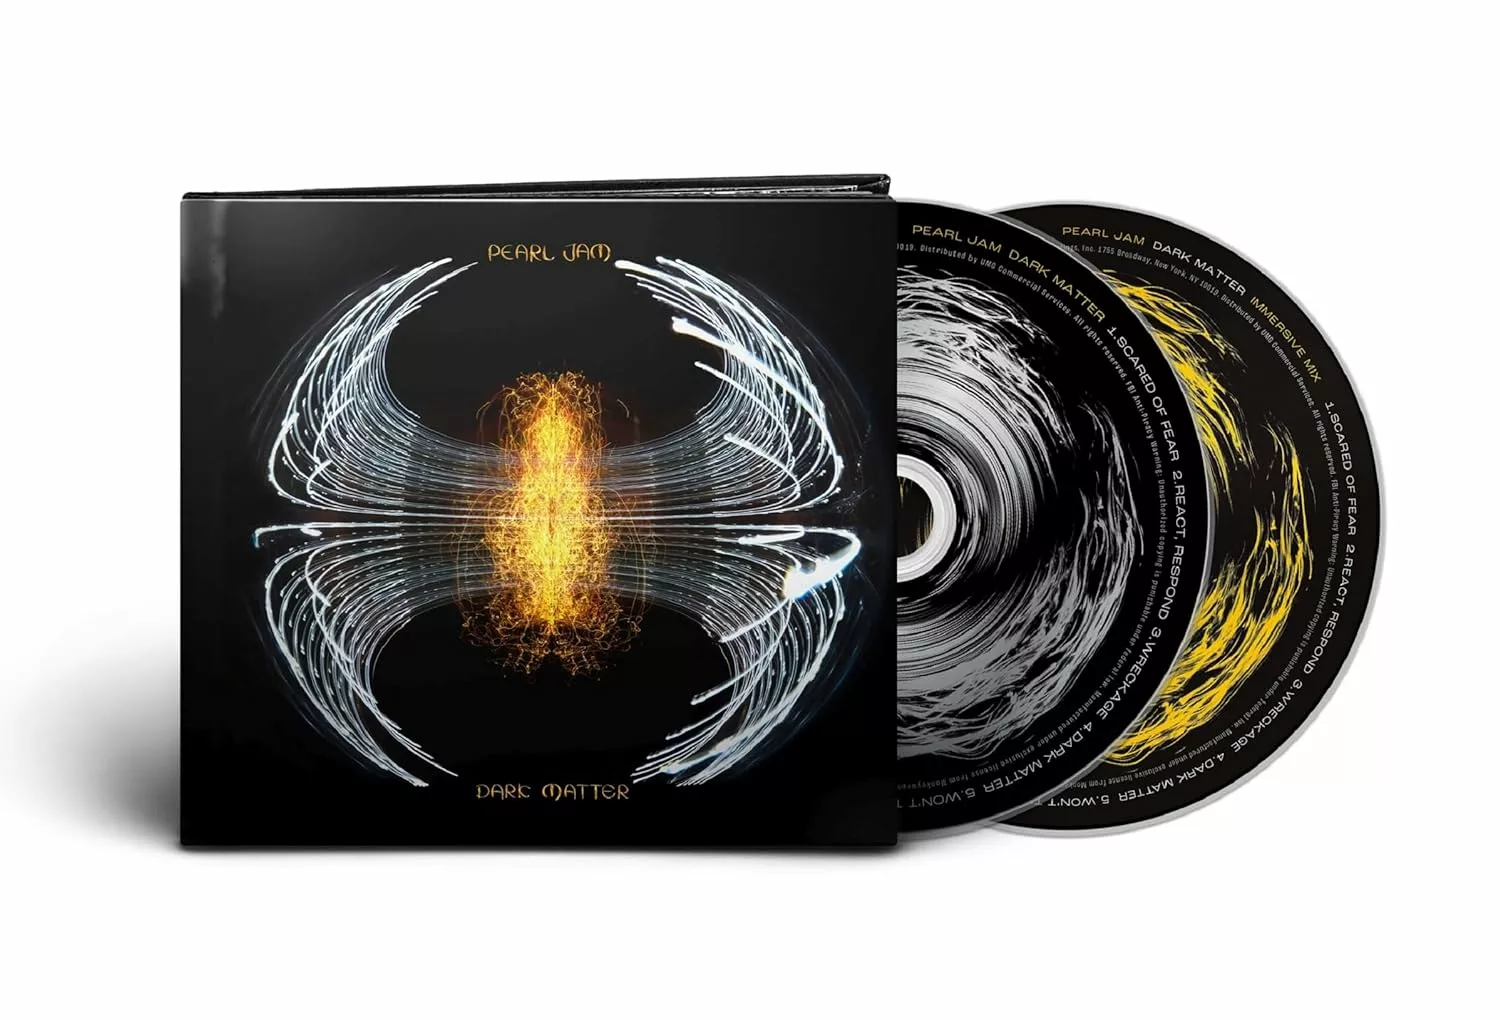 PEARL JAM - Dark Matter (Deluxe Edition) [DIGIPAK CD+BLURAY]